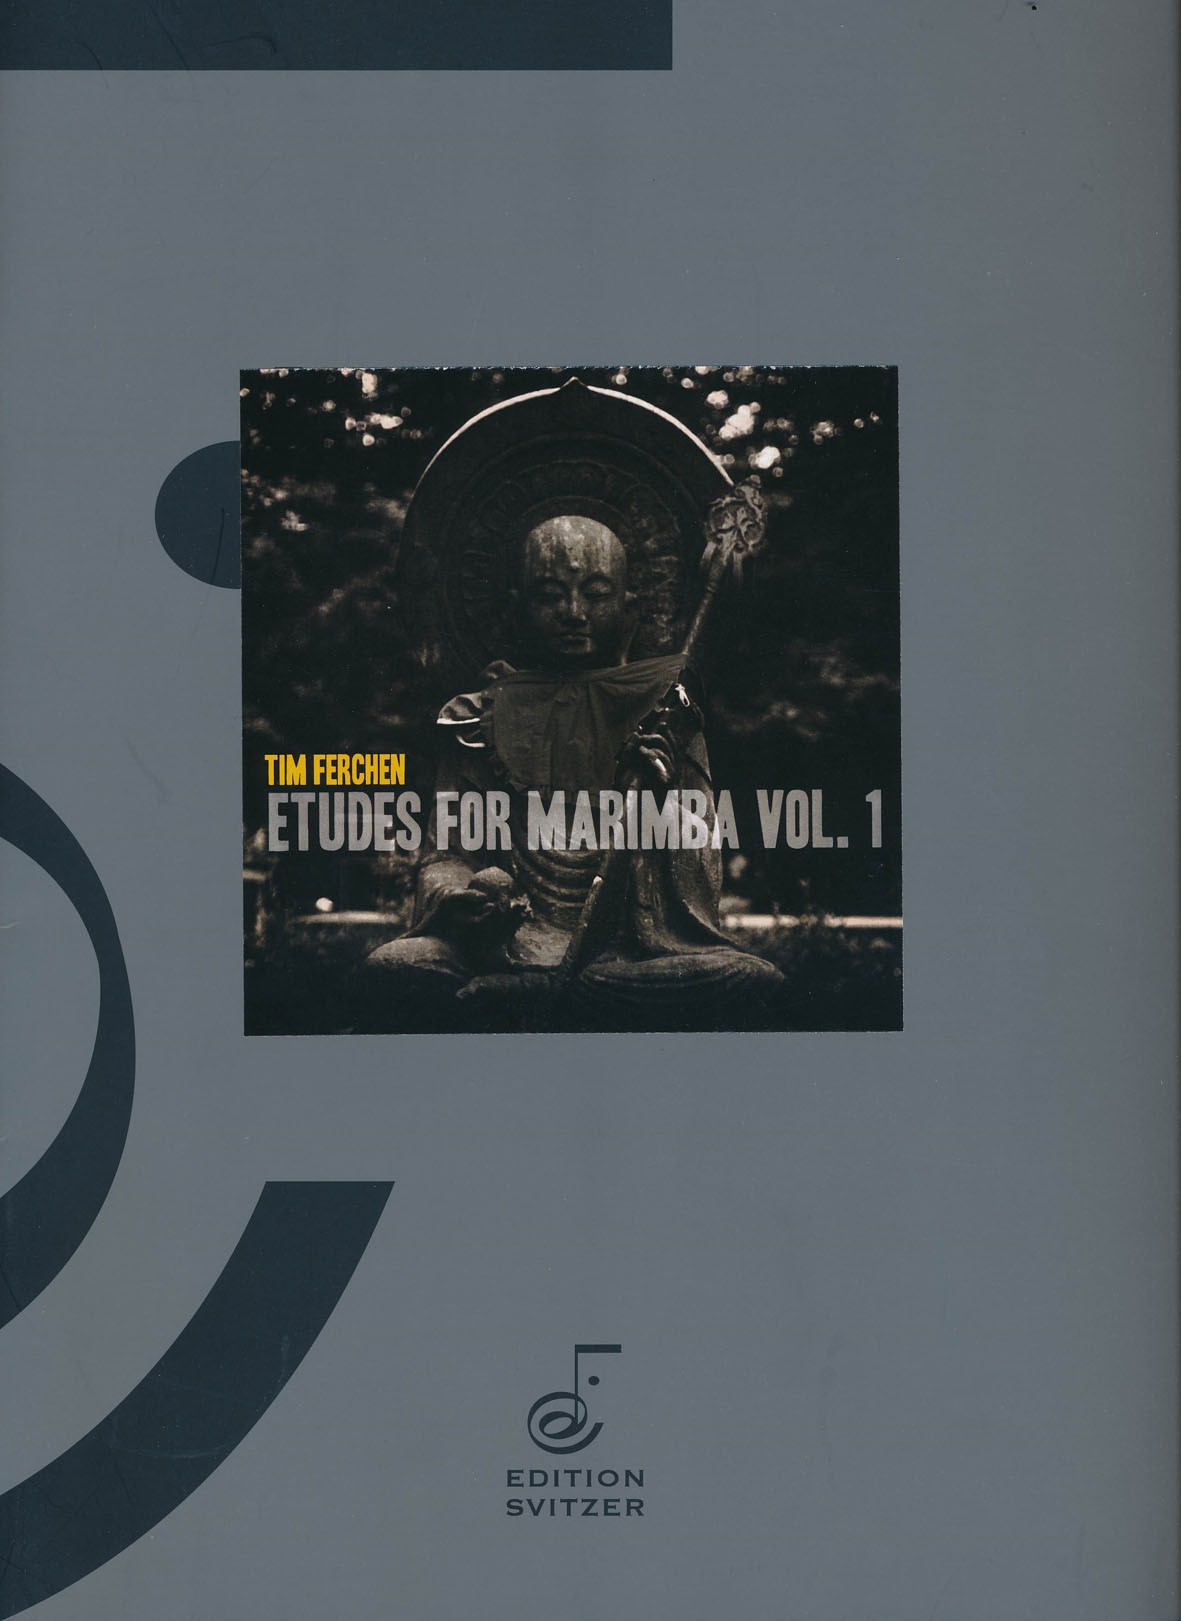 Etudes for Marimba Vol. 1 by Tim Ferchen